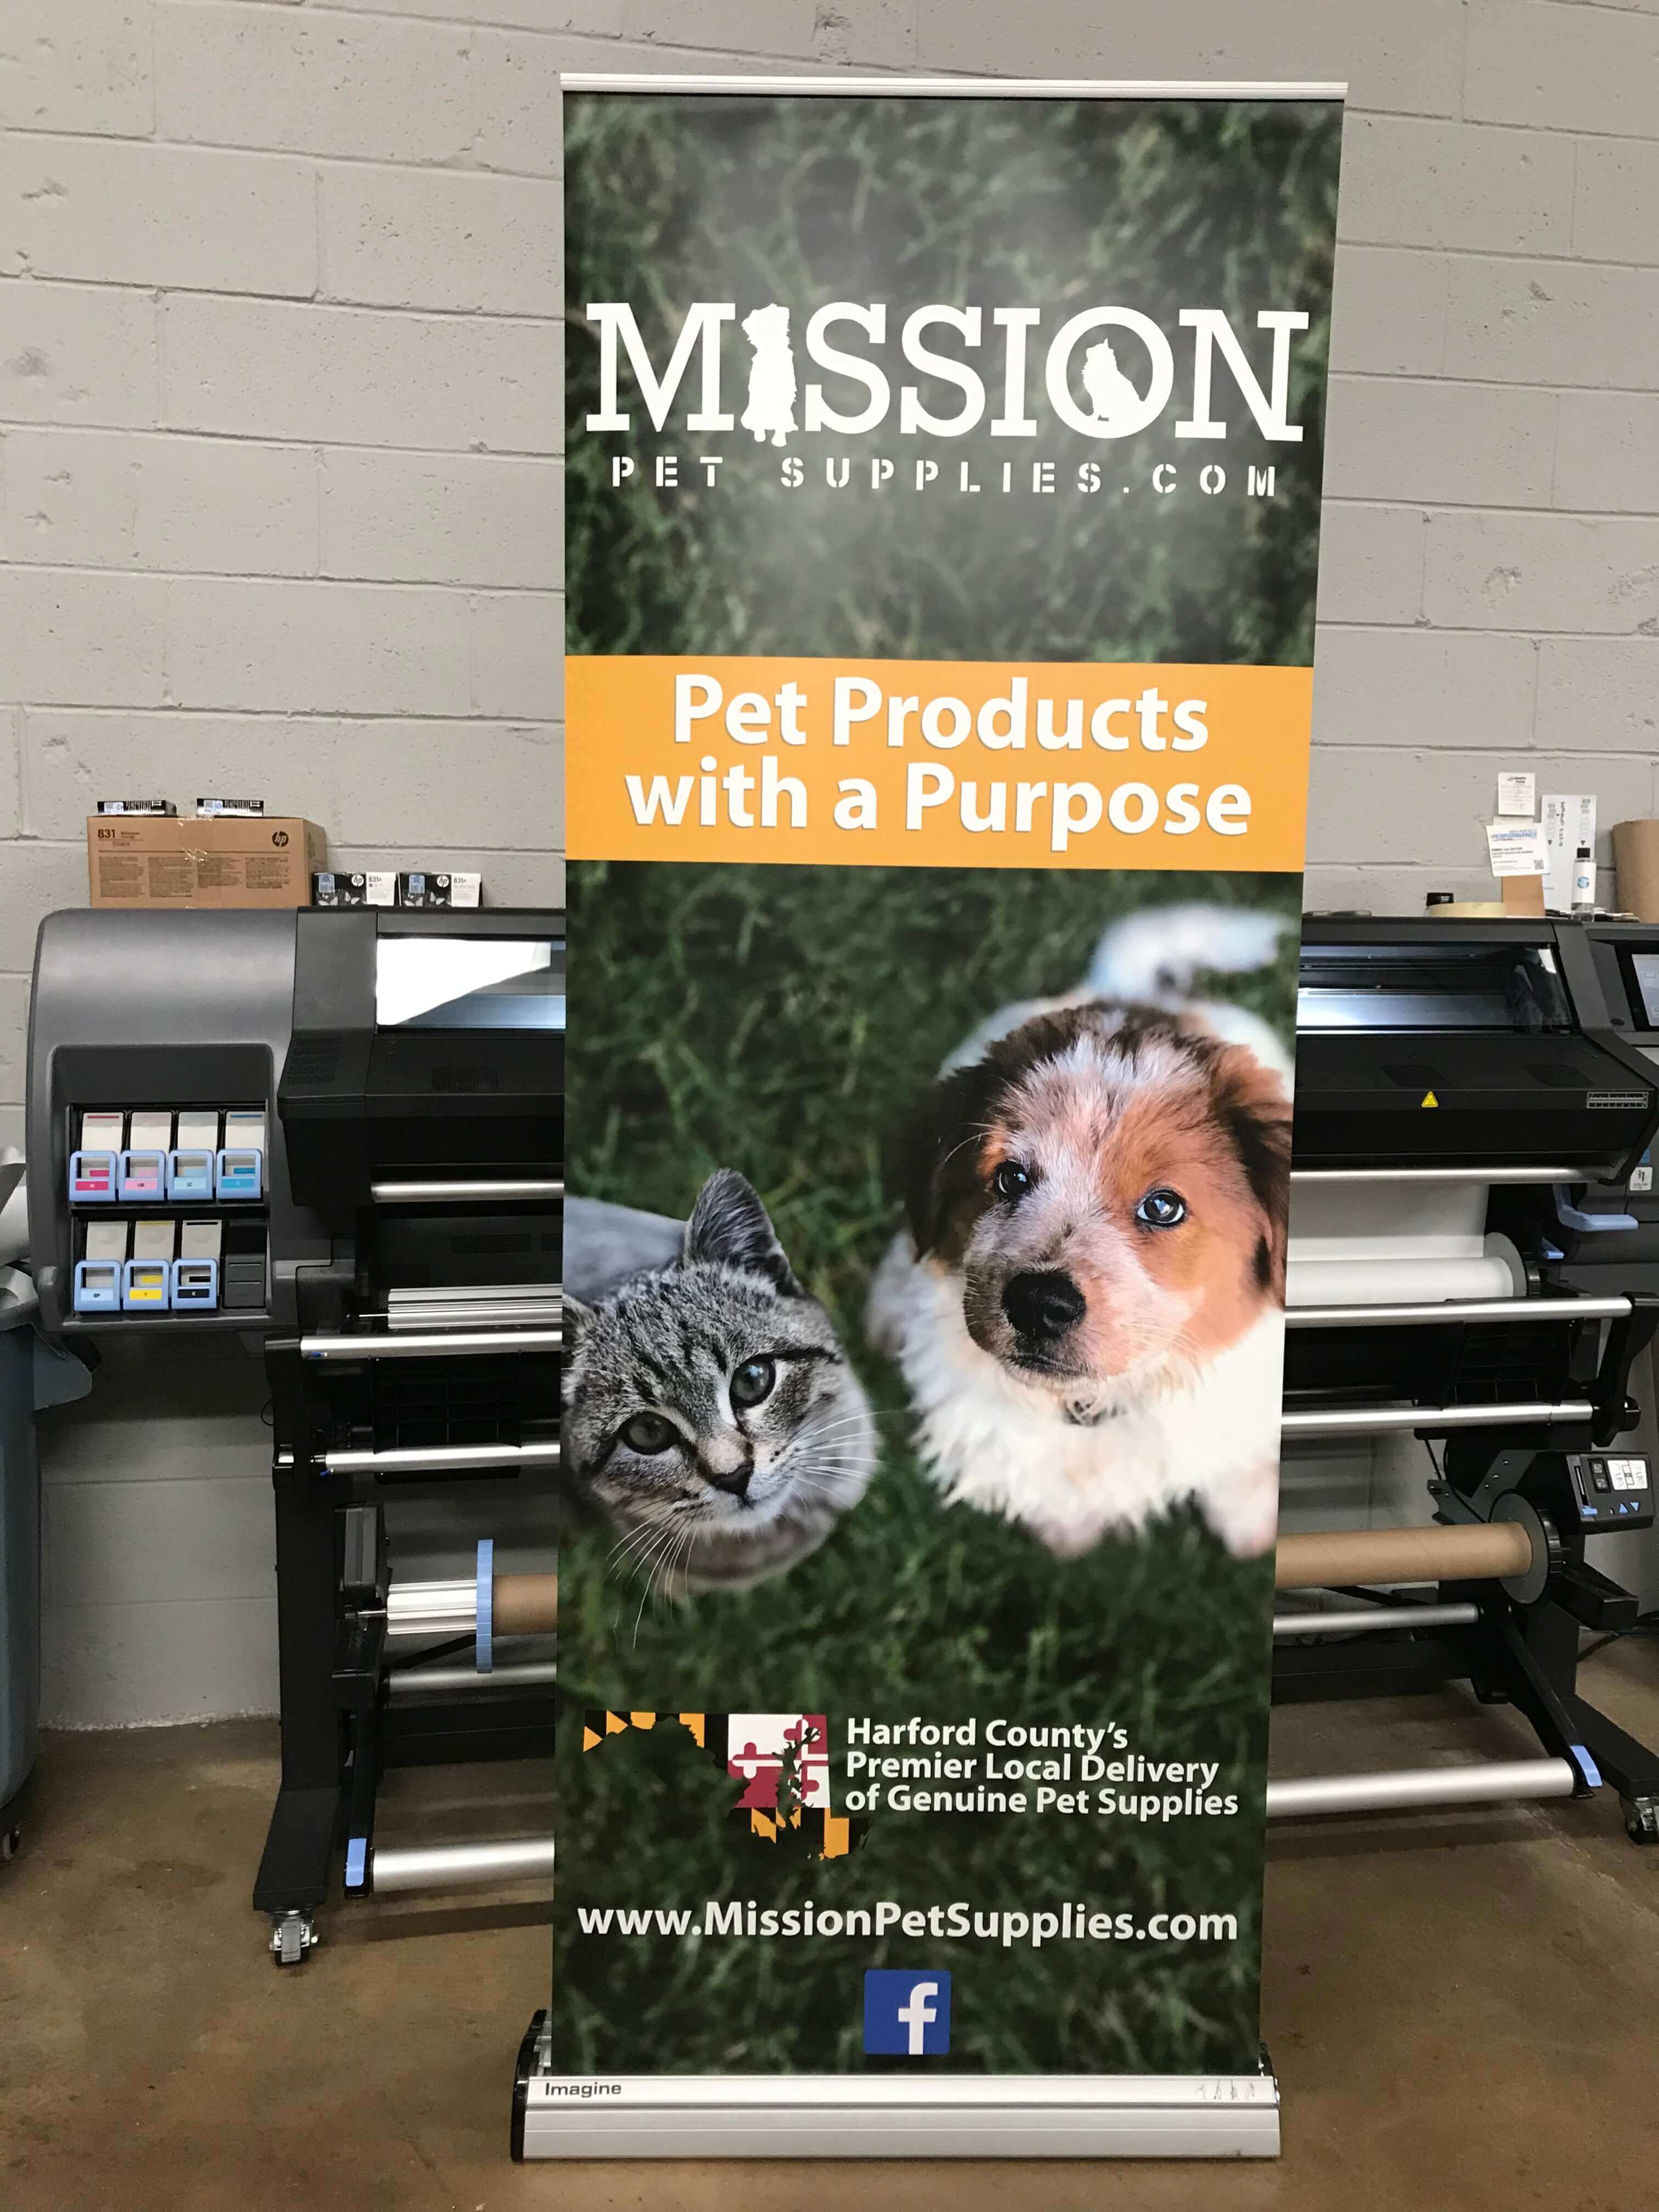 Mission Pet Supplies retractable banner